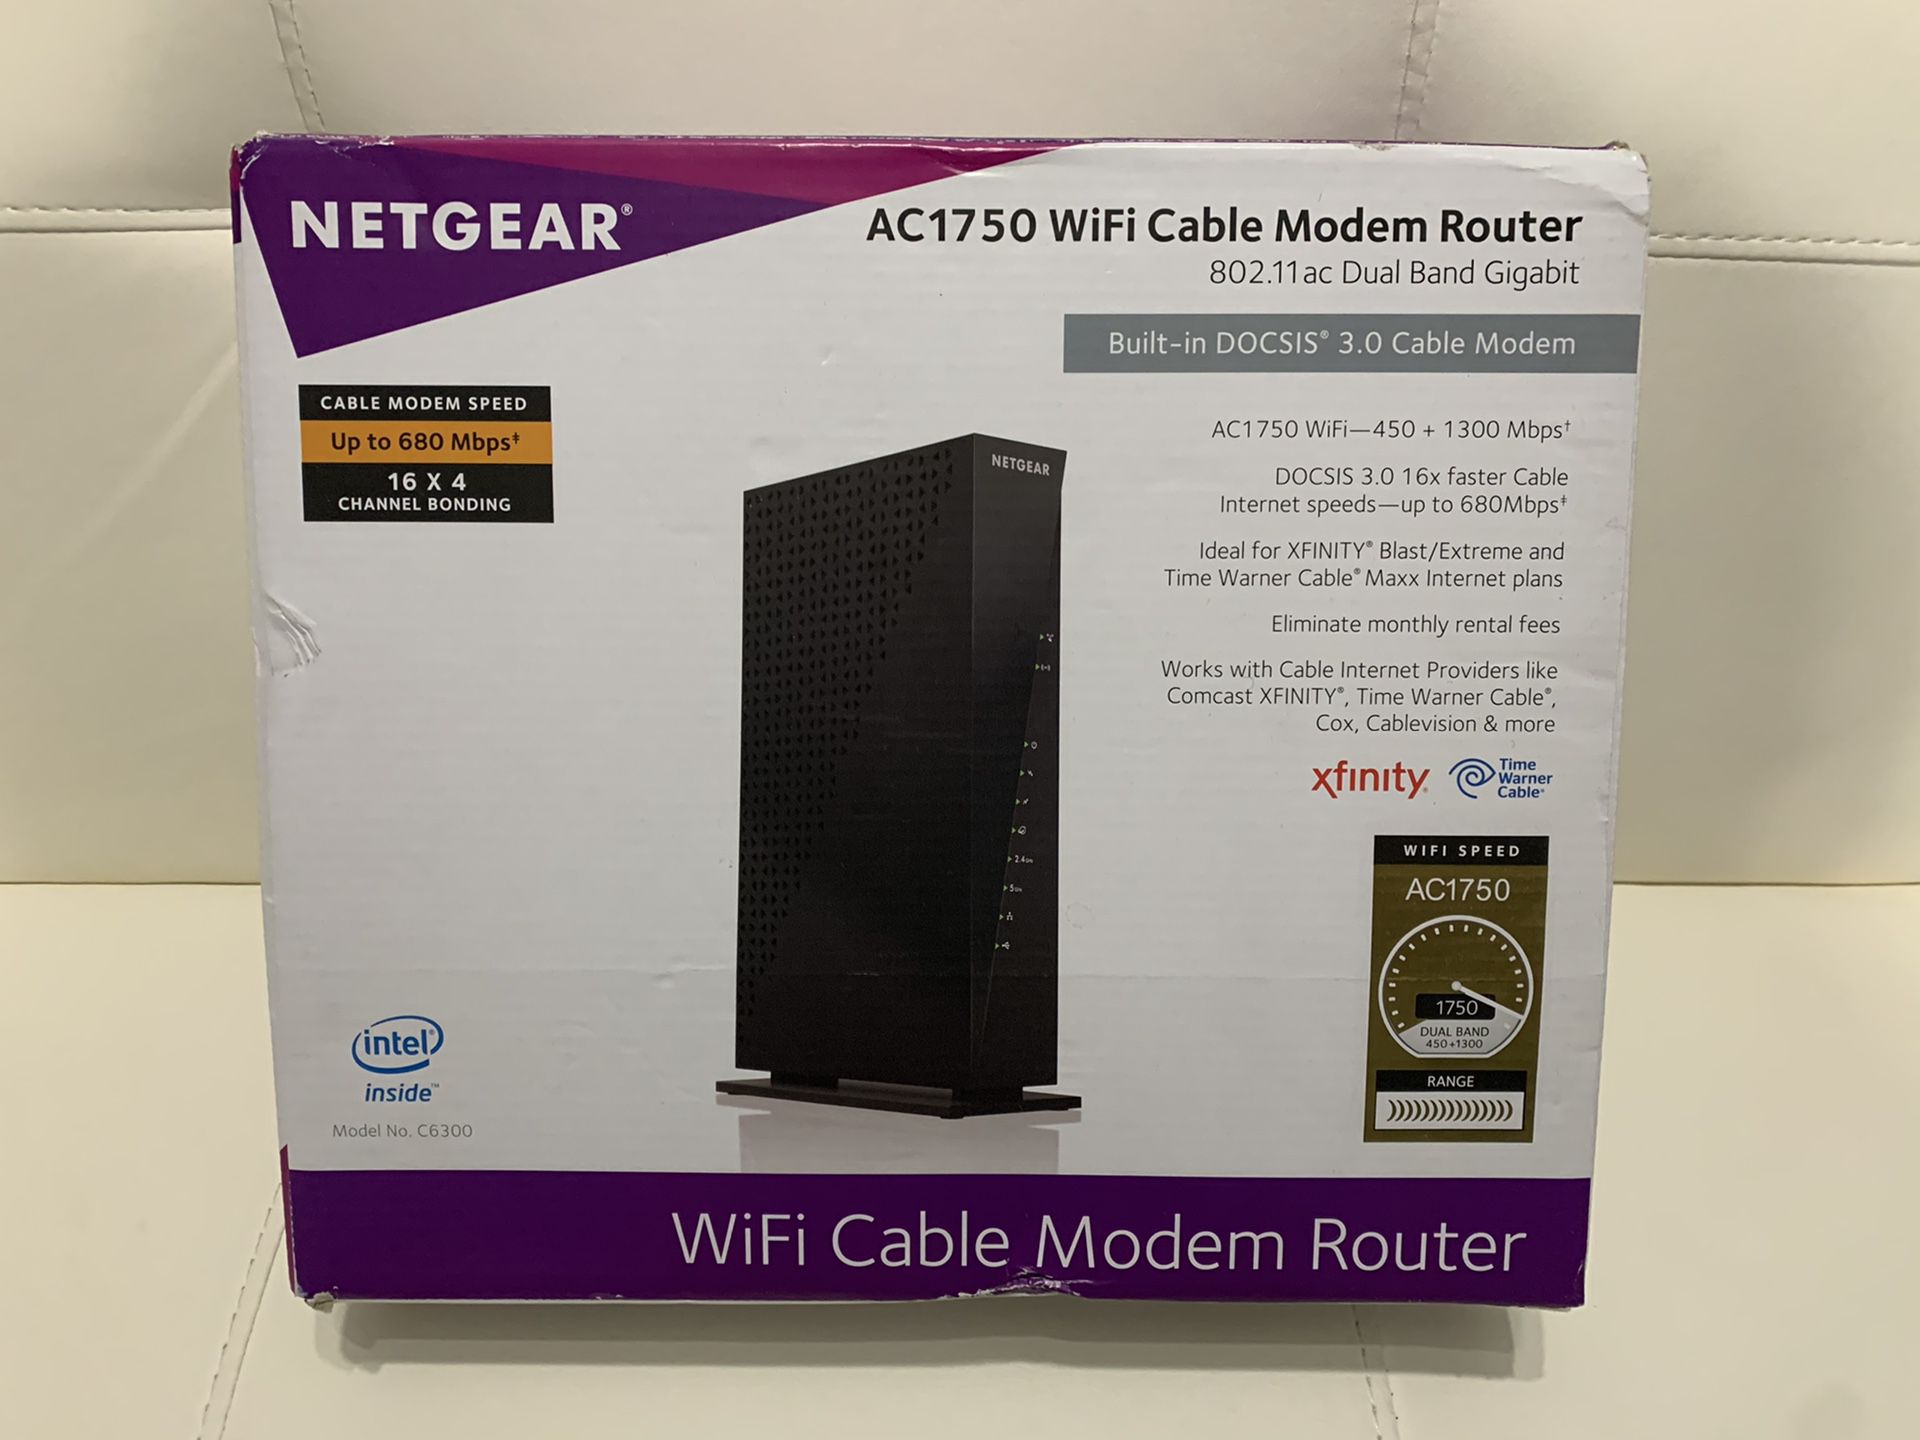 Netgear Cable Modem Router Combo C6300-100NAS AC1750 (16x4) DOCSIS 3.0 WiFi (C6300) Xfinity